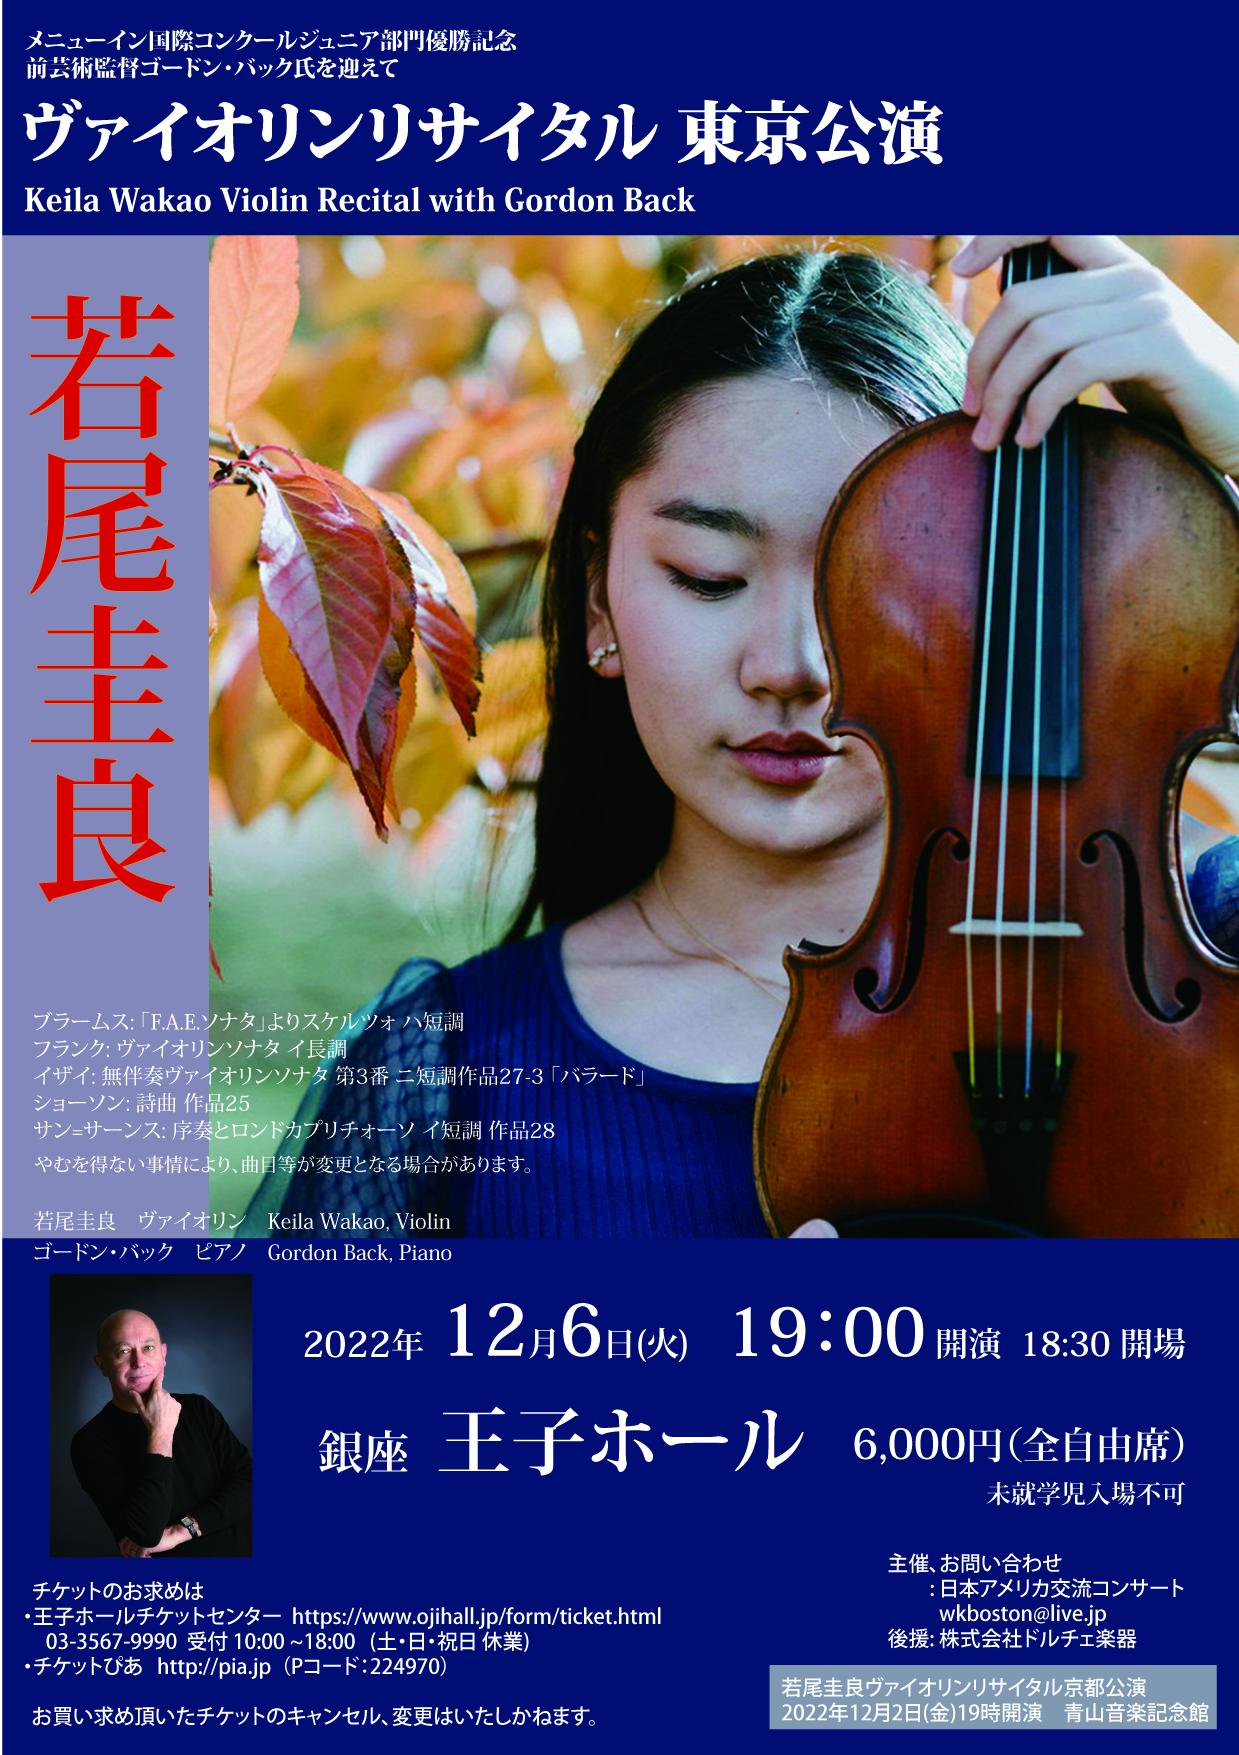 Keira Wakao Violin Recital in Tokyo